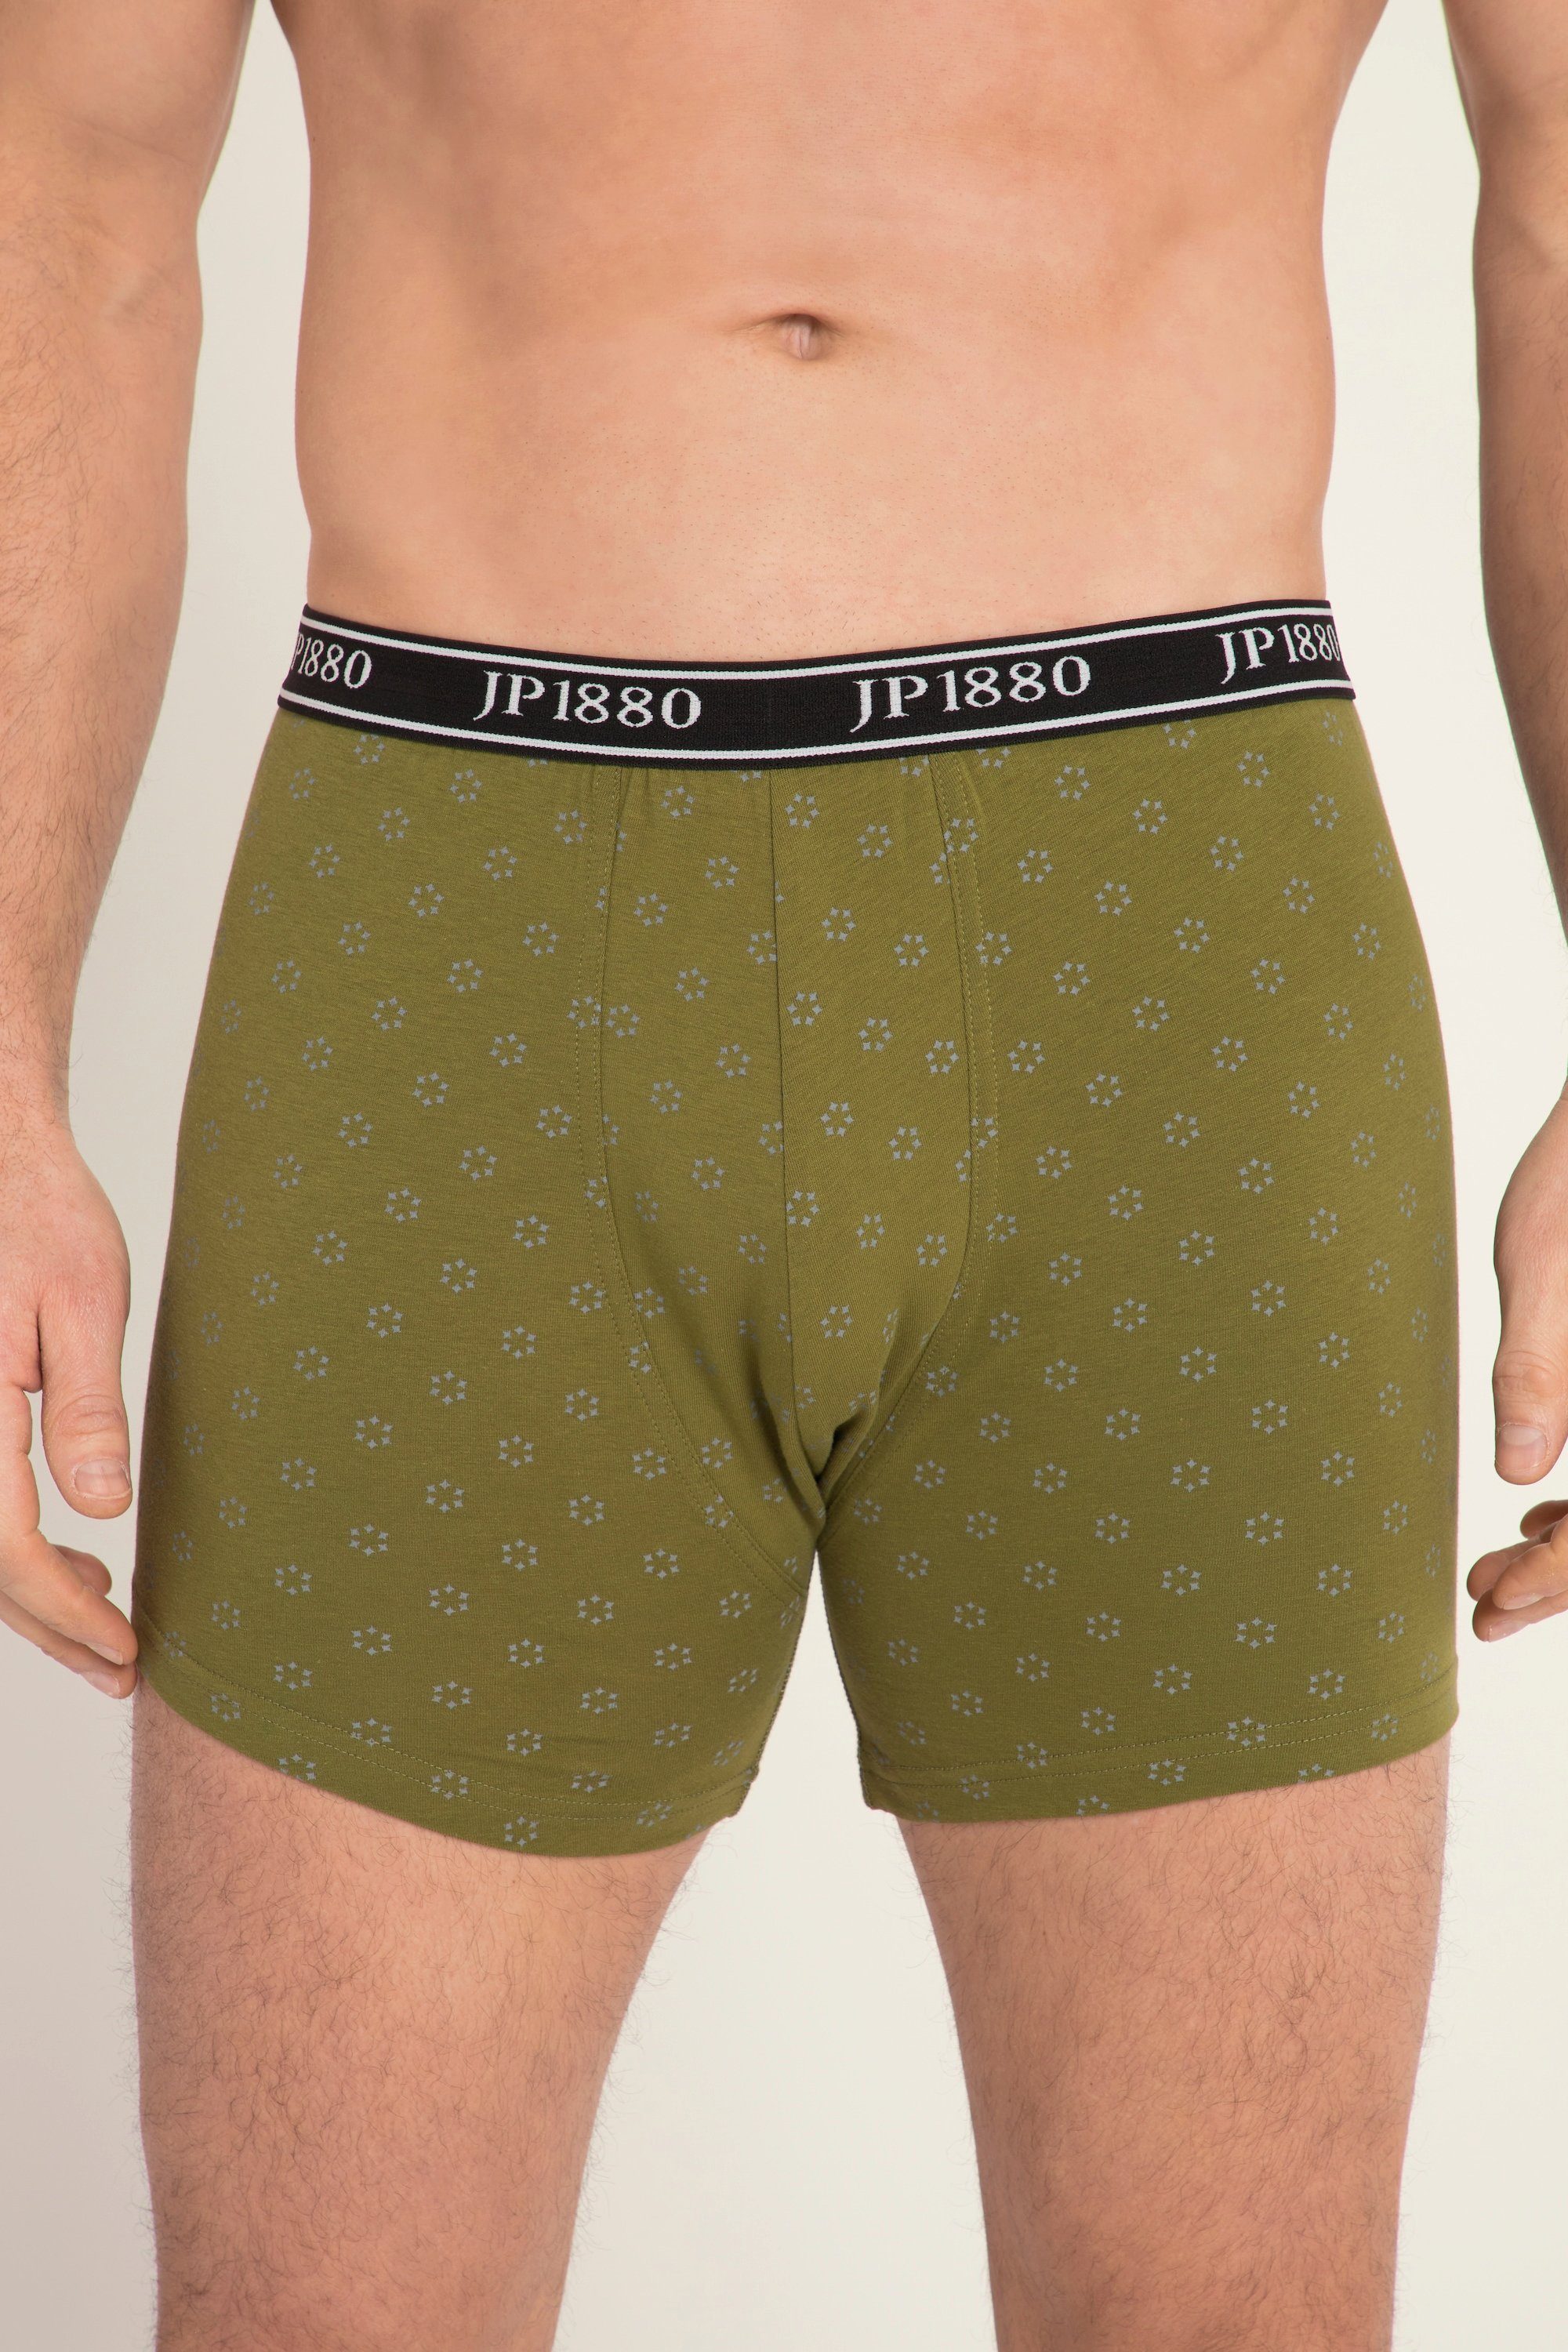 JP1880 Boxershorts Midpants FLEXNAMIC® 2er-Pack grün Unterhose